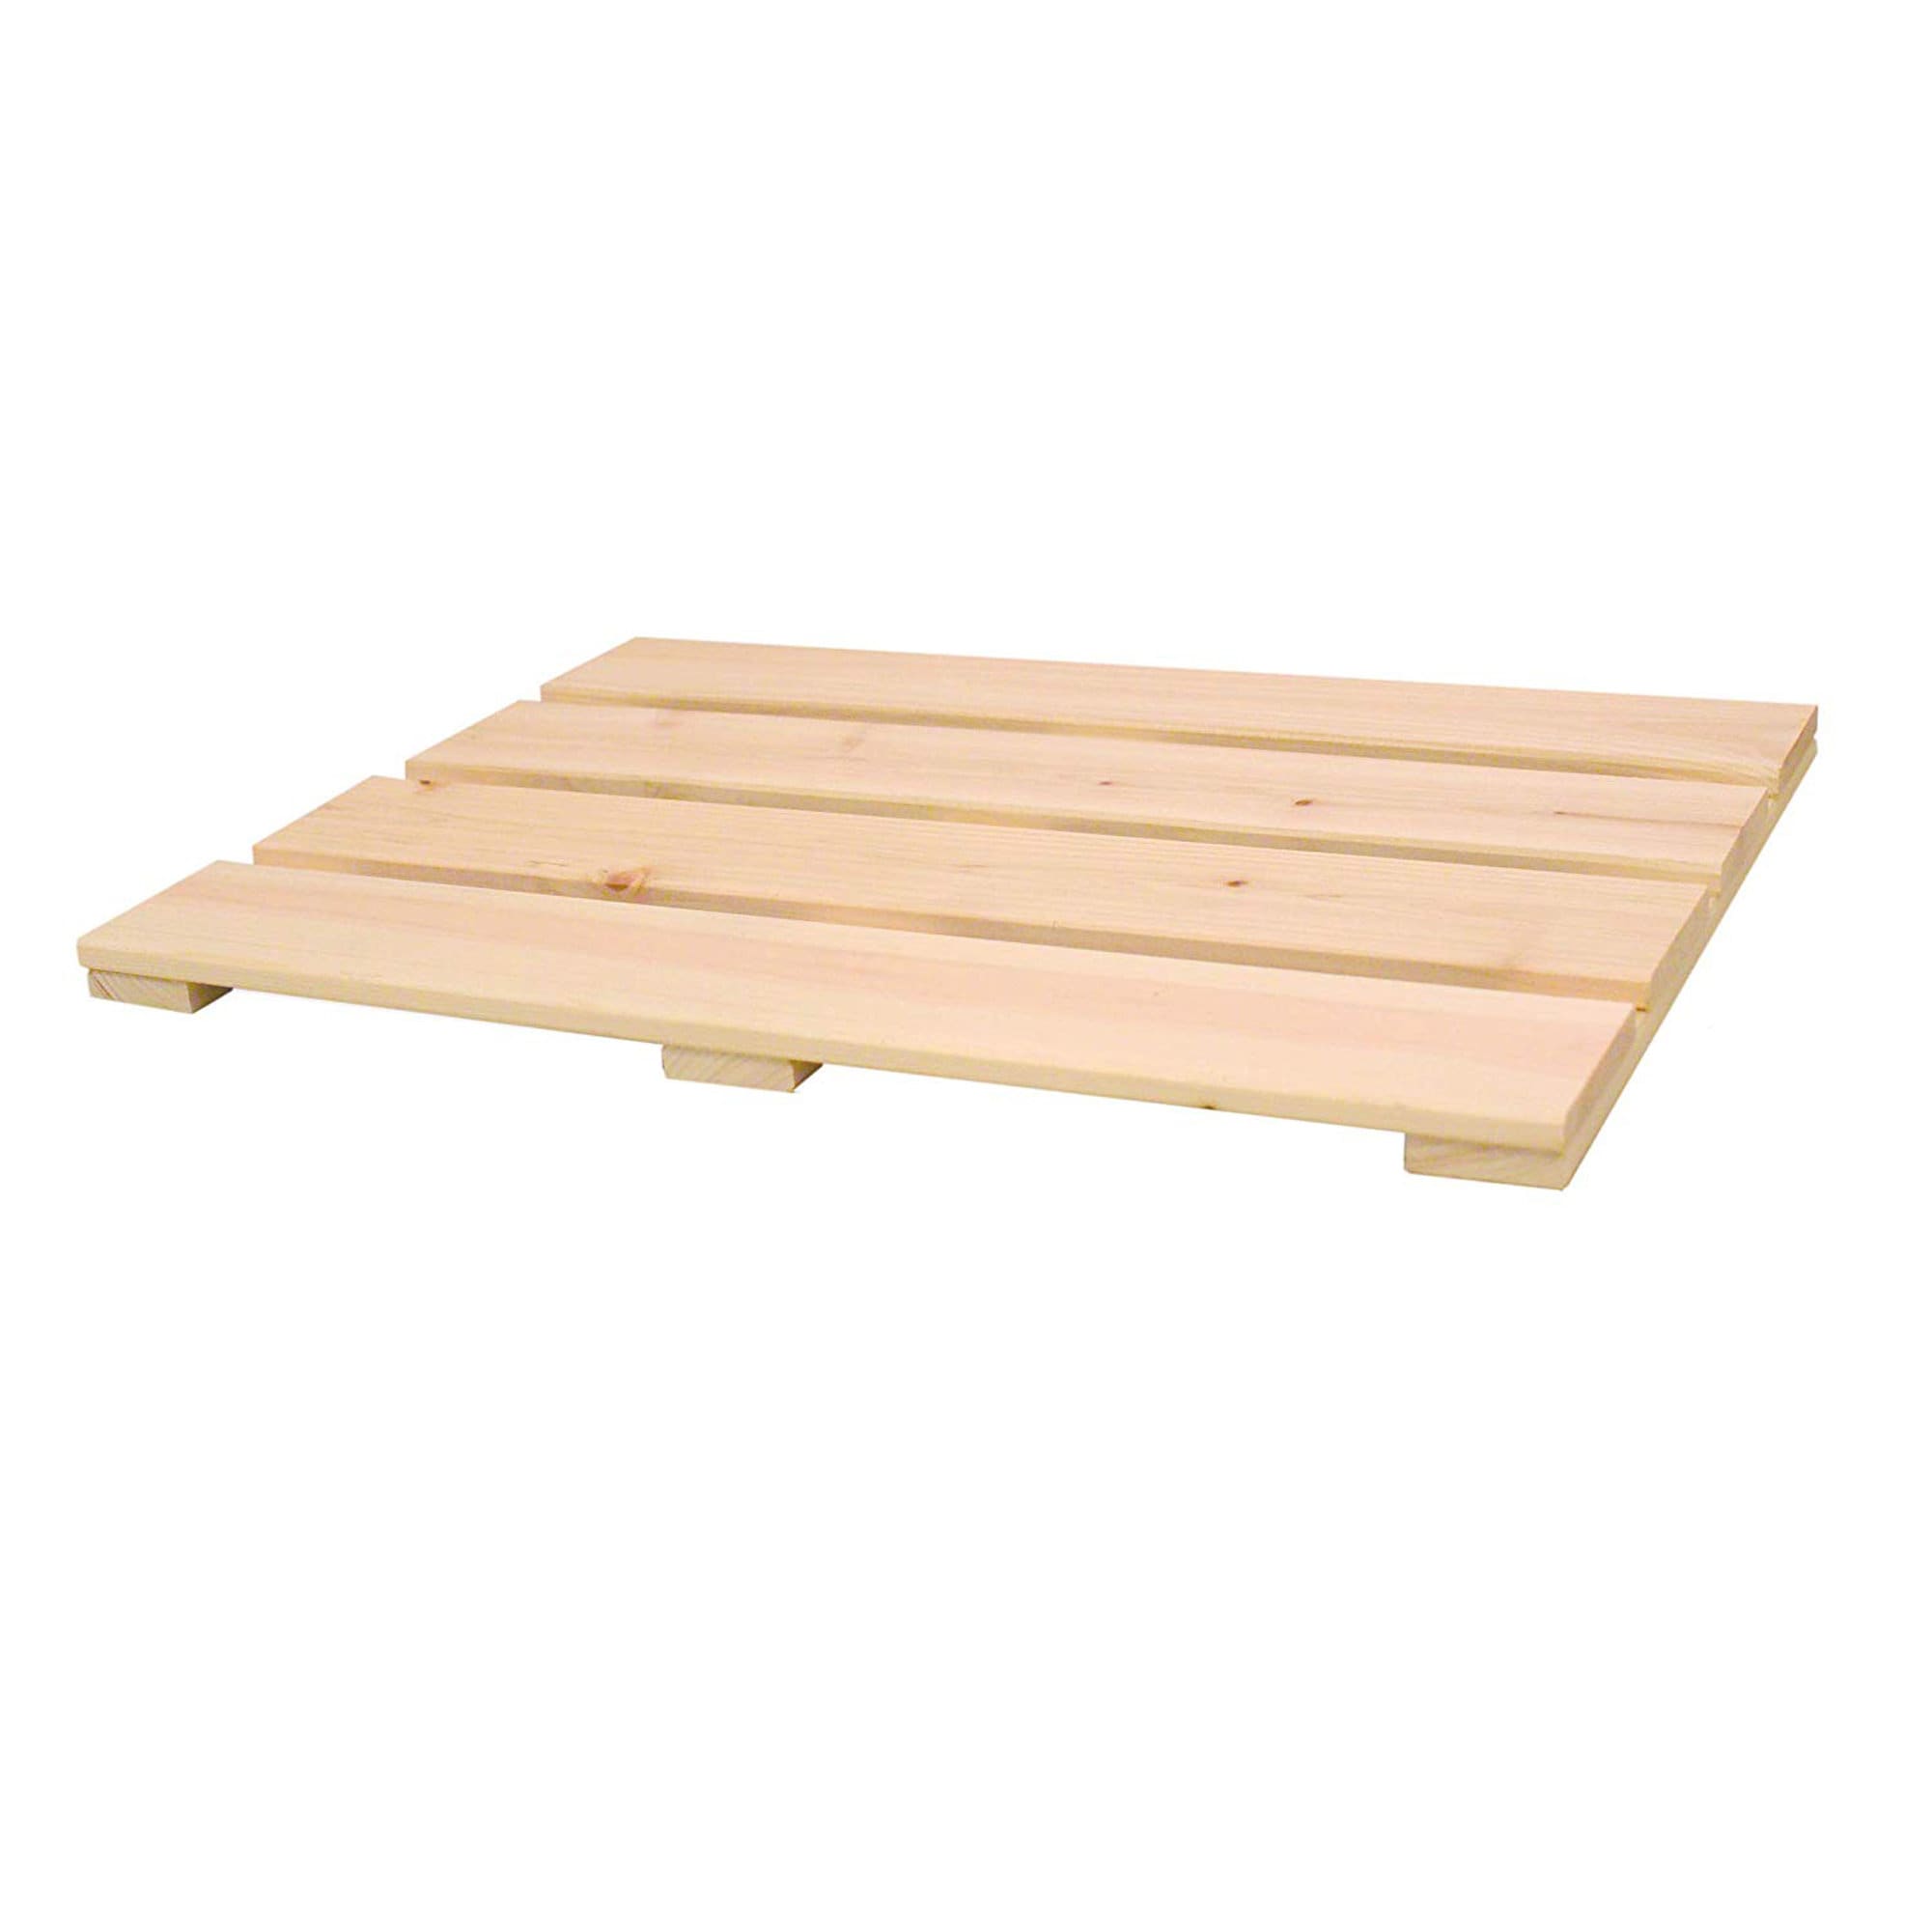  YLLFFLL Wood Indoor and Outdoor Shower/Bath/Spa Mat, Non-Slip  Wooden Platform for Sauna, Pool, Hot Tub, 30/50/60/70/80/100/110/120cm Long  (Size : 80cmx100cm(31.5x39.4in)) : Patio, Lawn & Garden